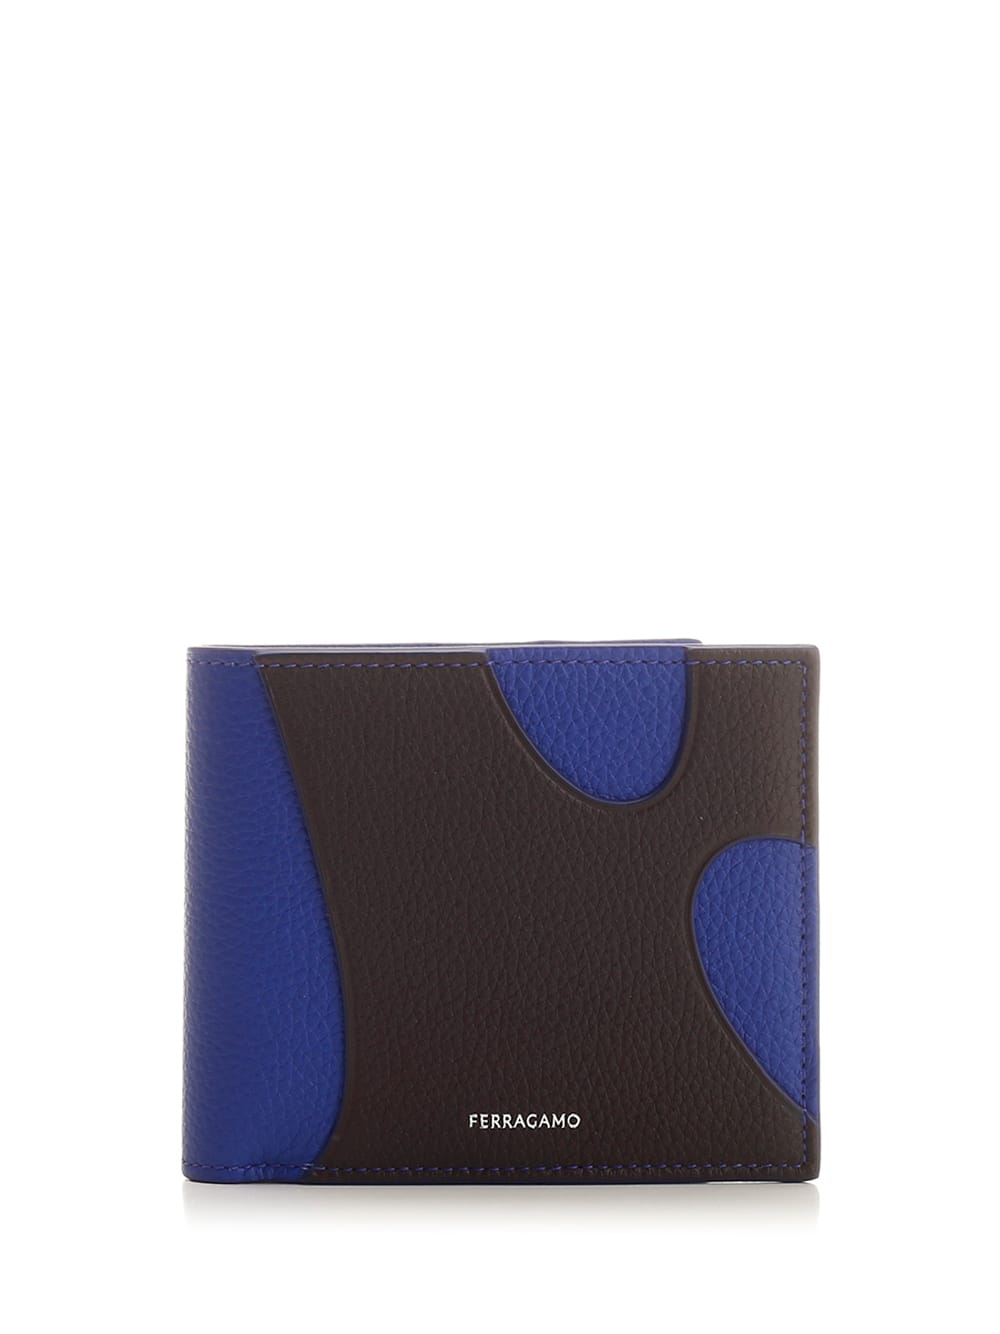 Ferragamo Black Wallet With Blue Cut Out In T.moro/lapis